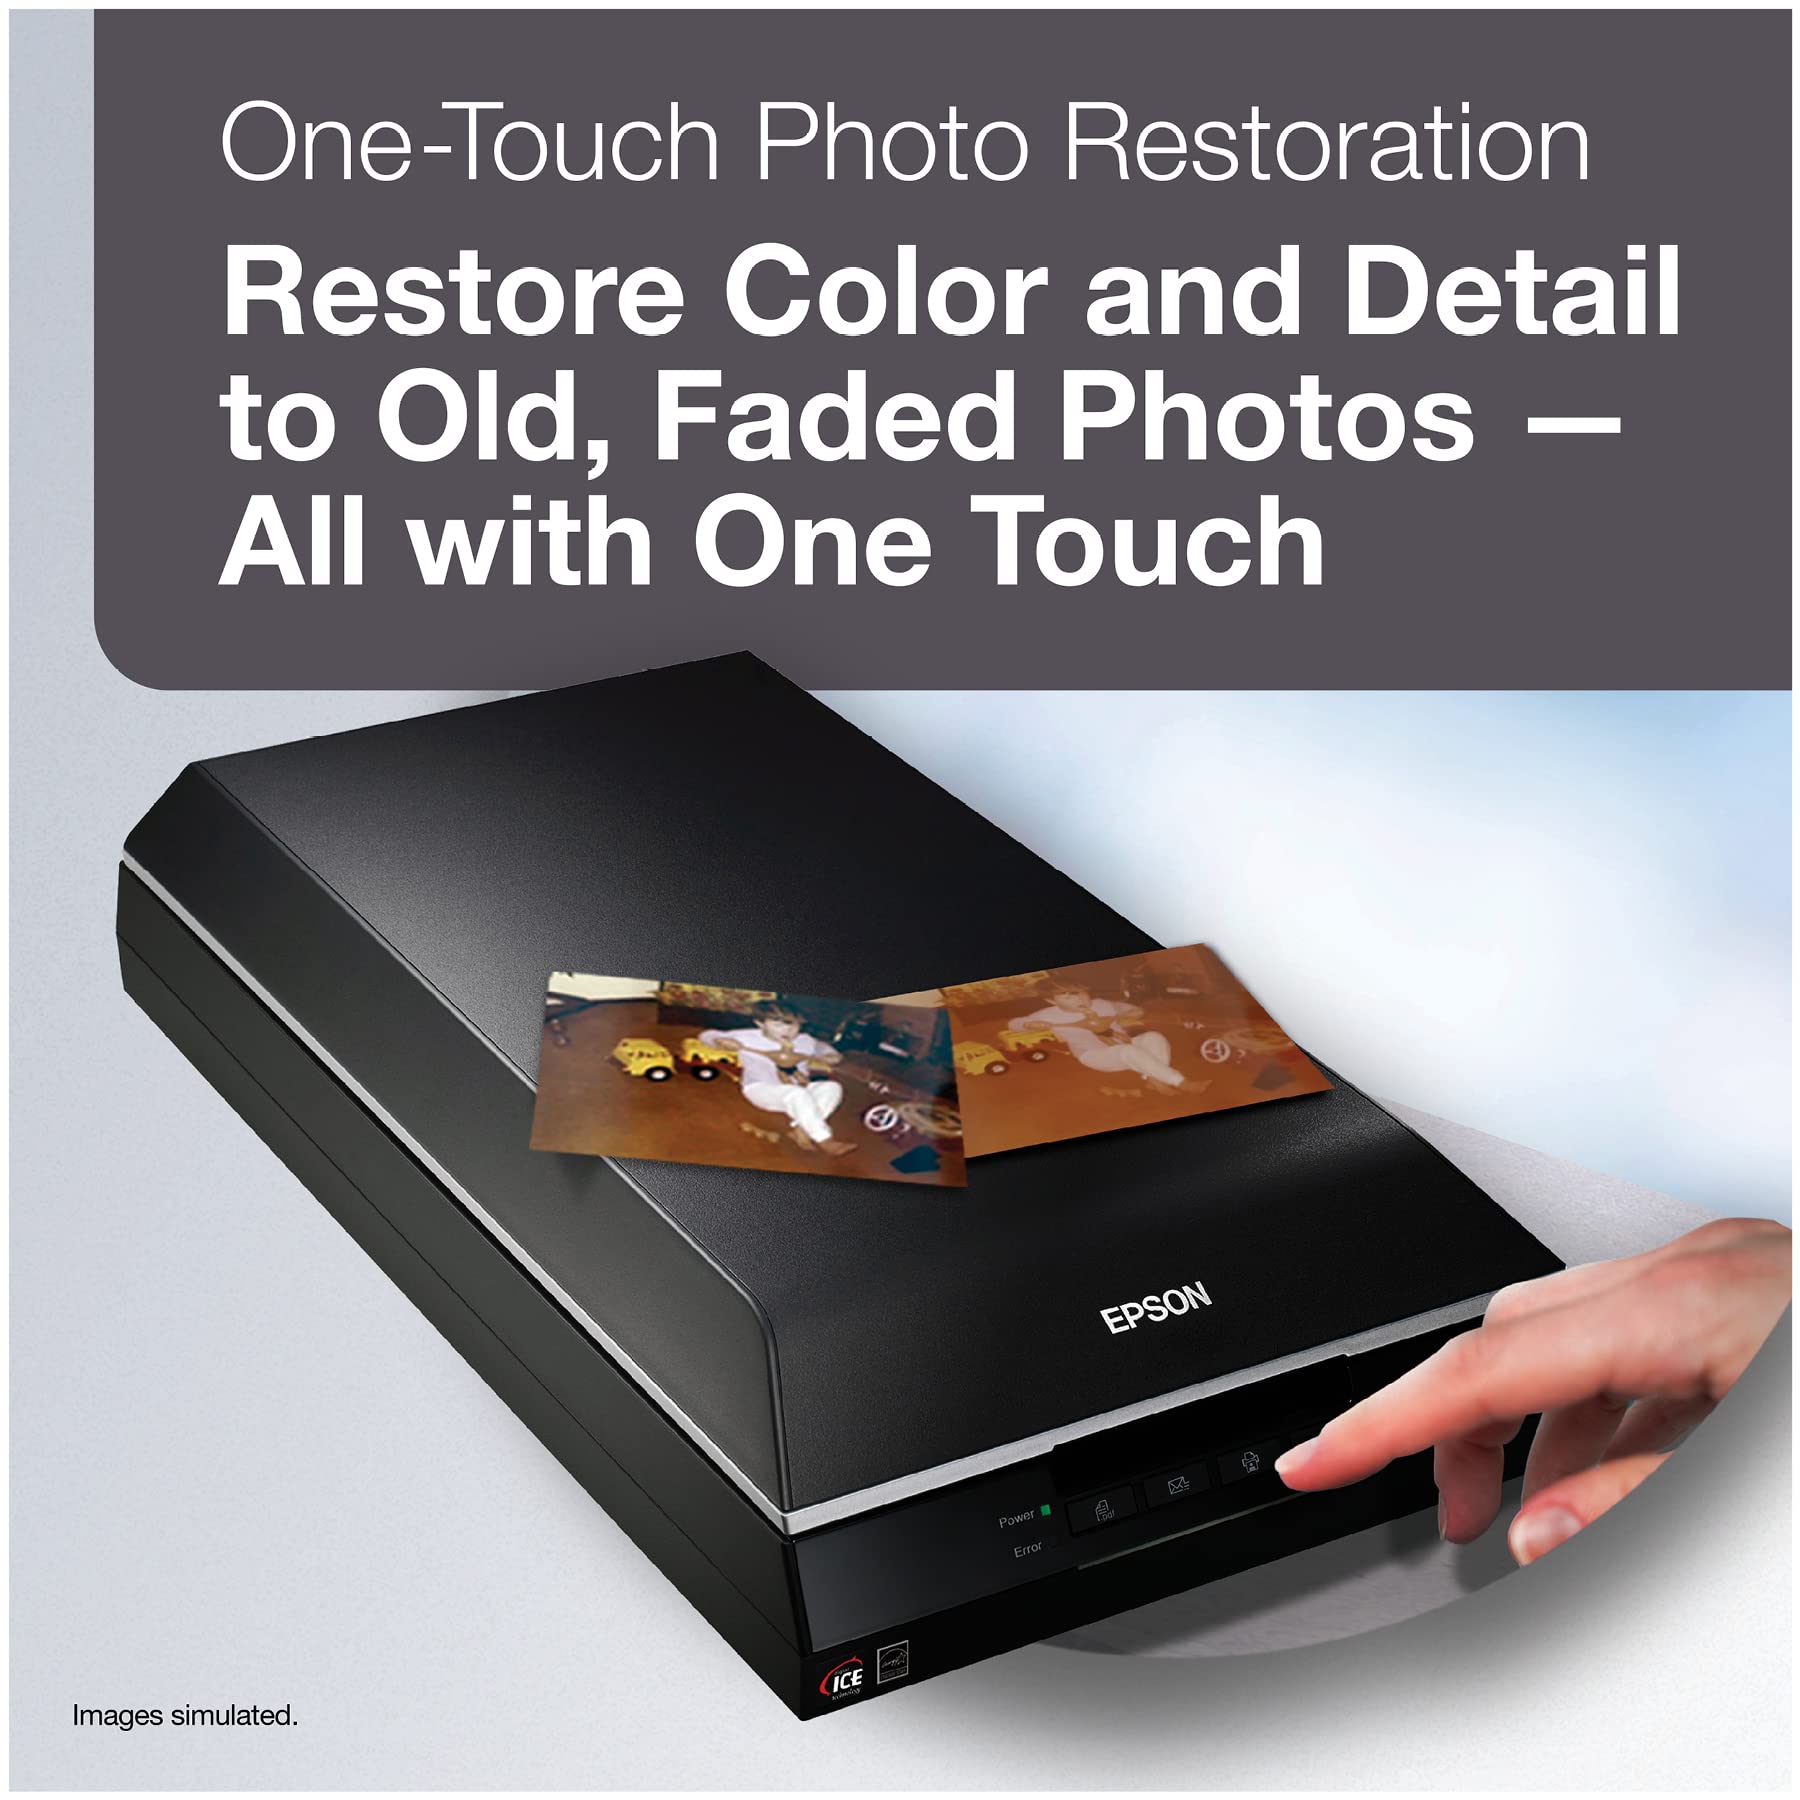 Epson Perfection V600 Color Photo, Image, Film, Negative & Document Scanner